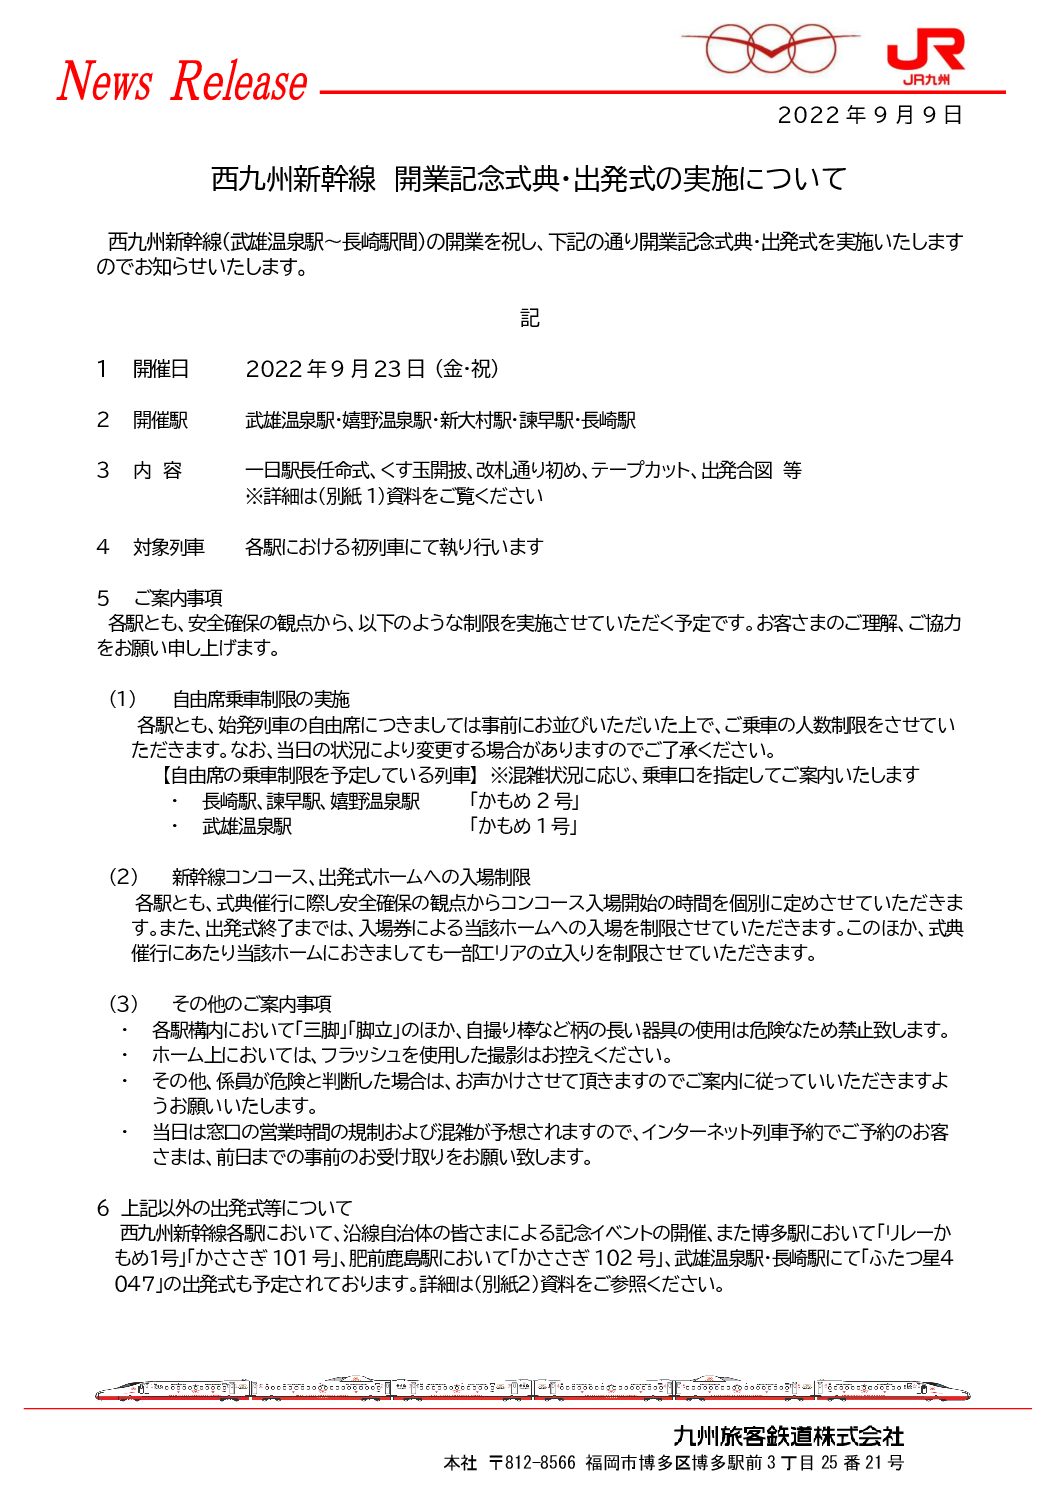 【JR九州】西九州新幹線開業記念式典・出発式の実施を決定